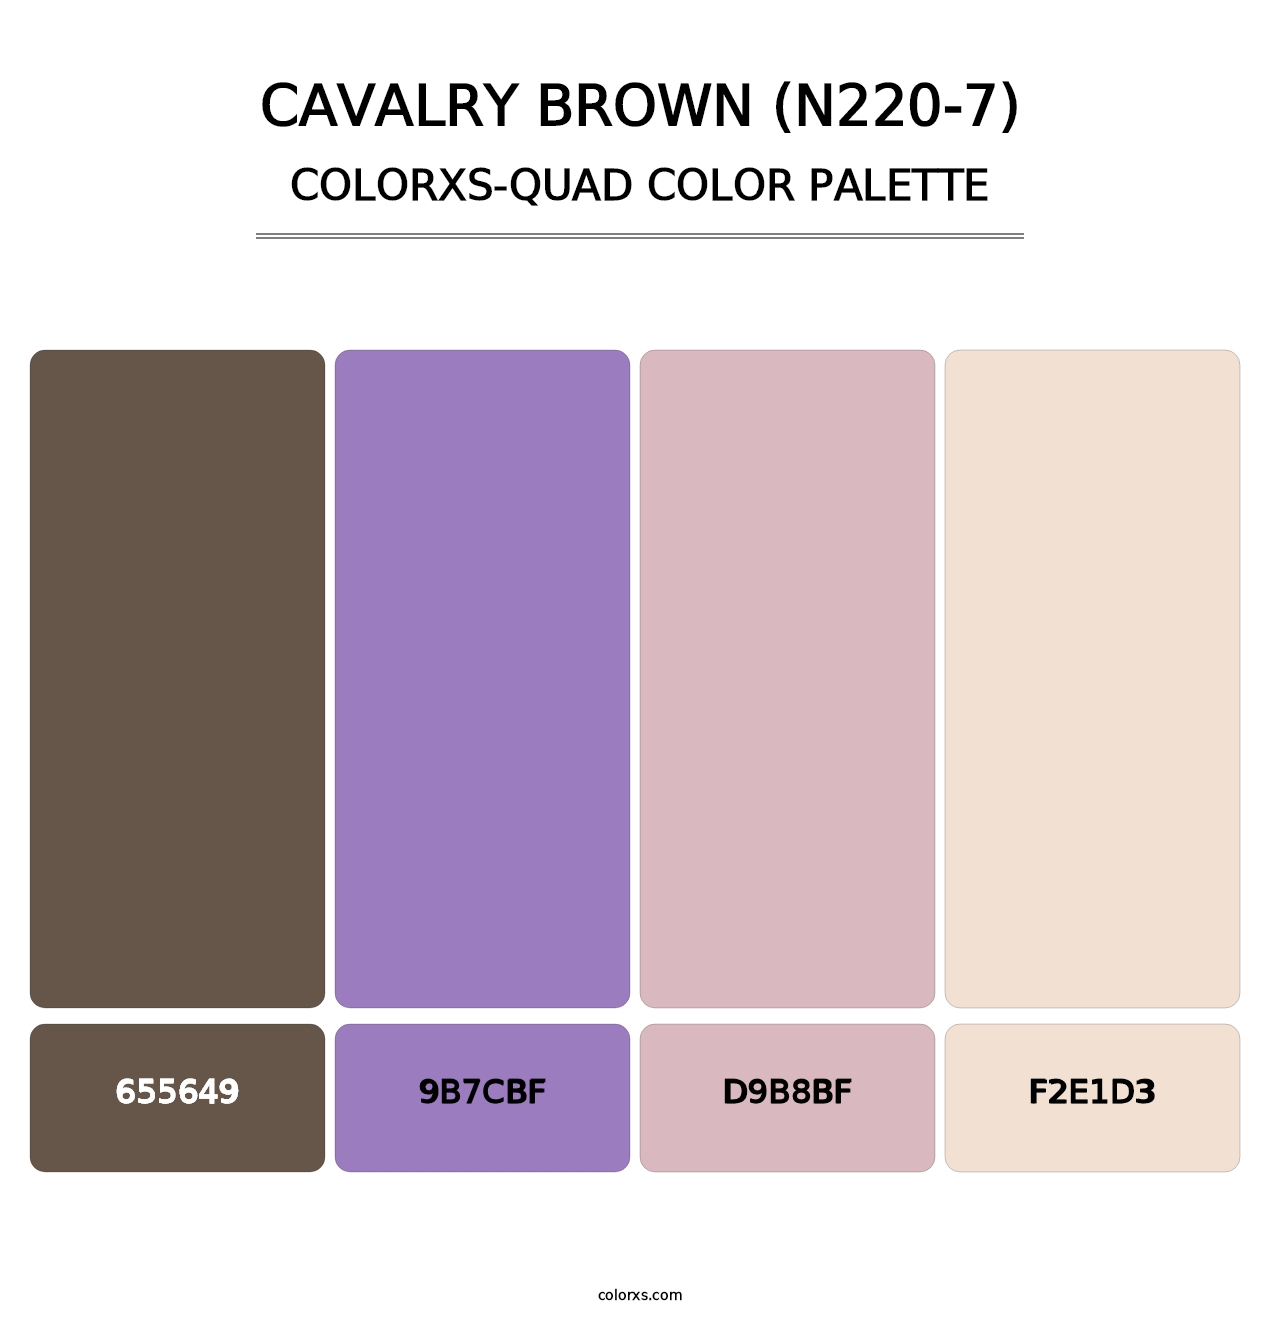 Cavalry Brown (N220-7) - Colorxs Quad Palette